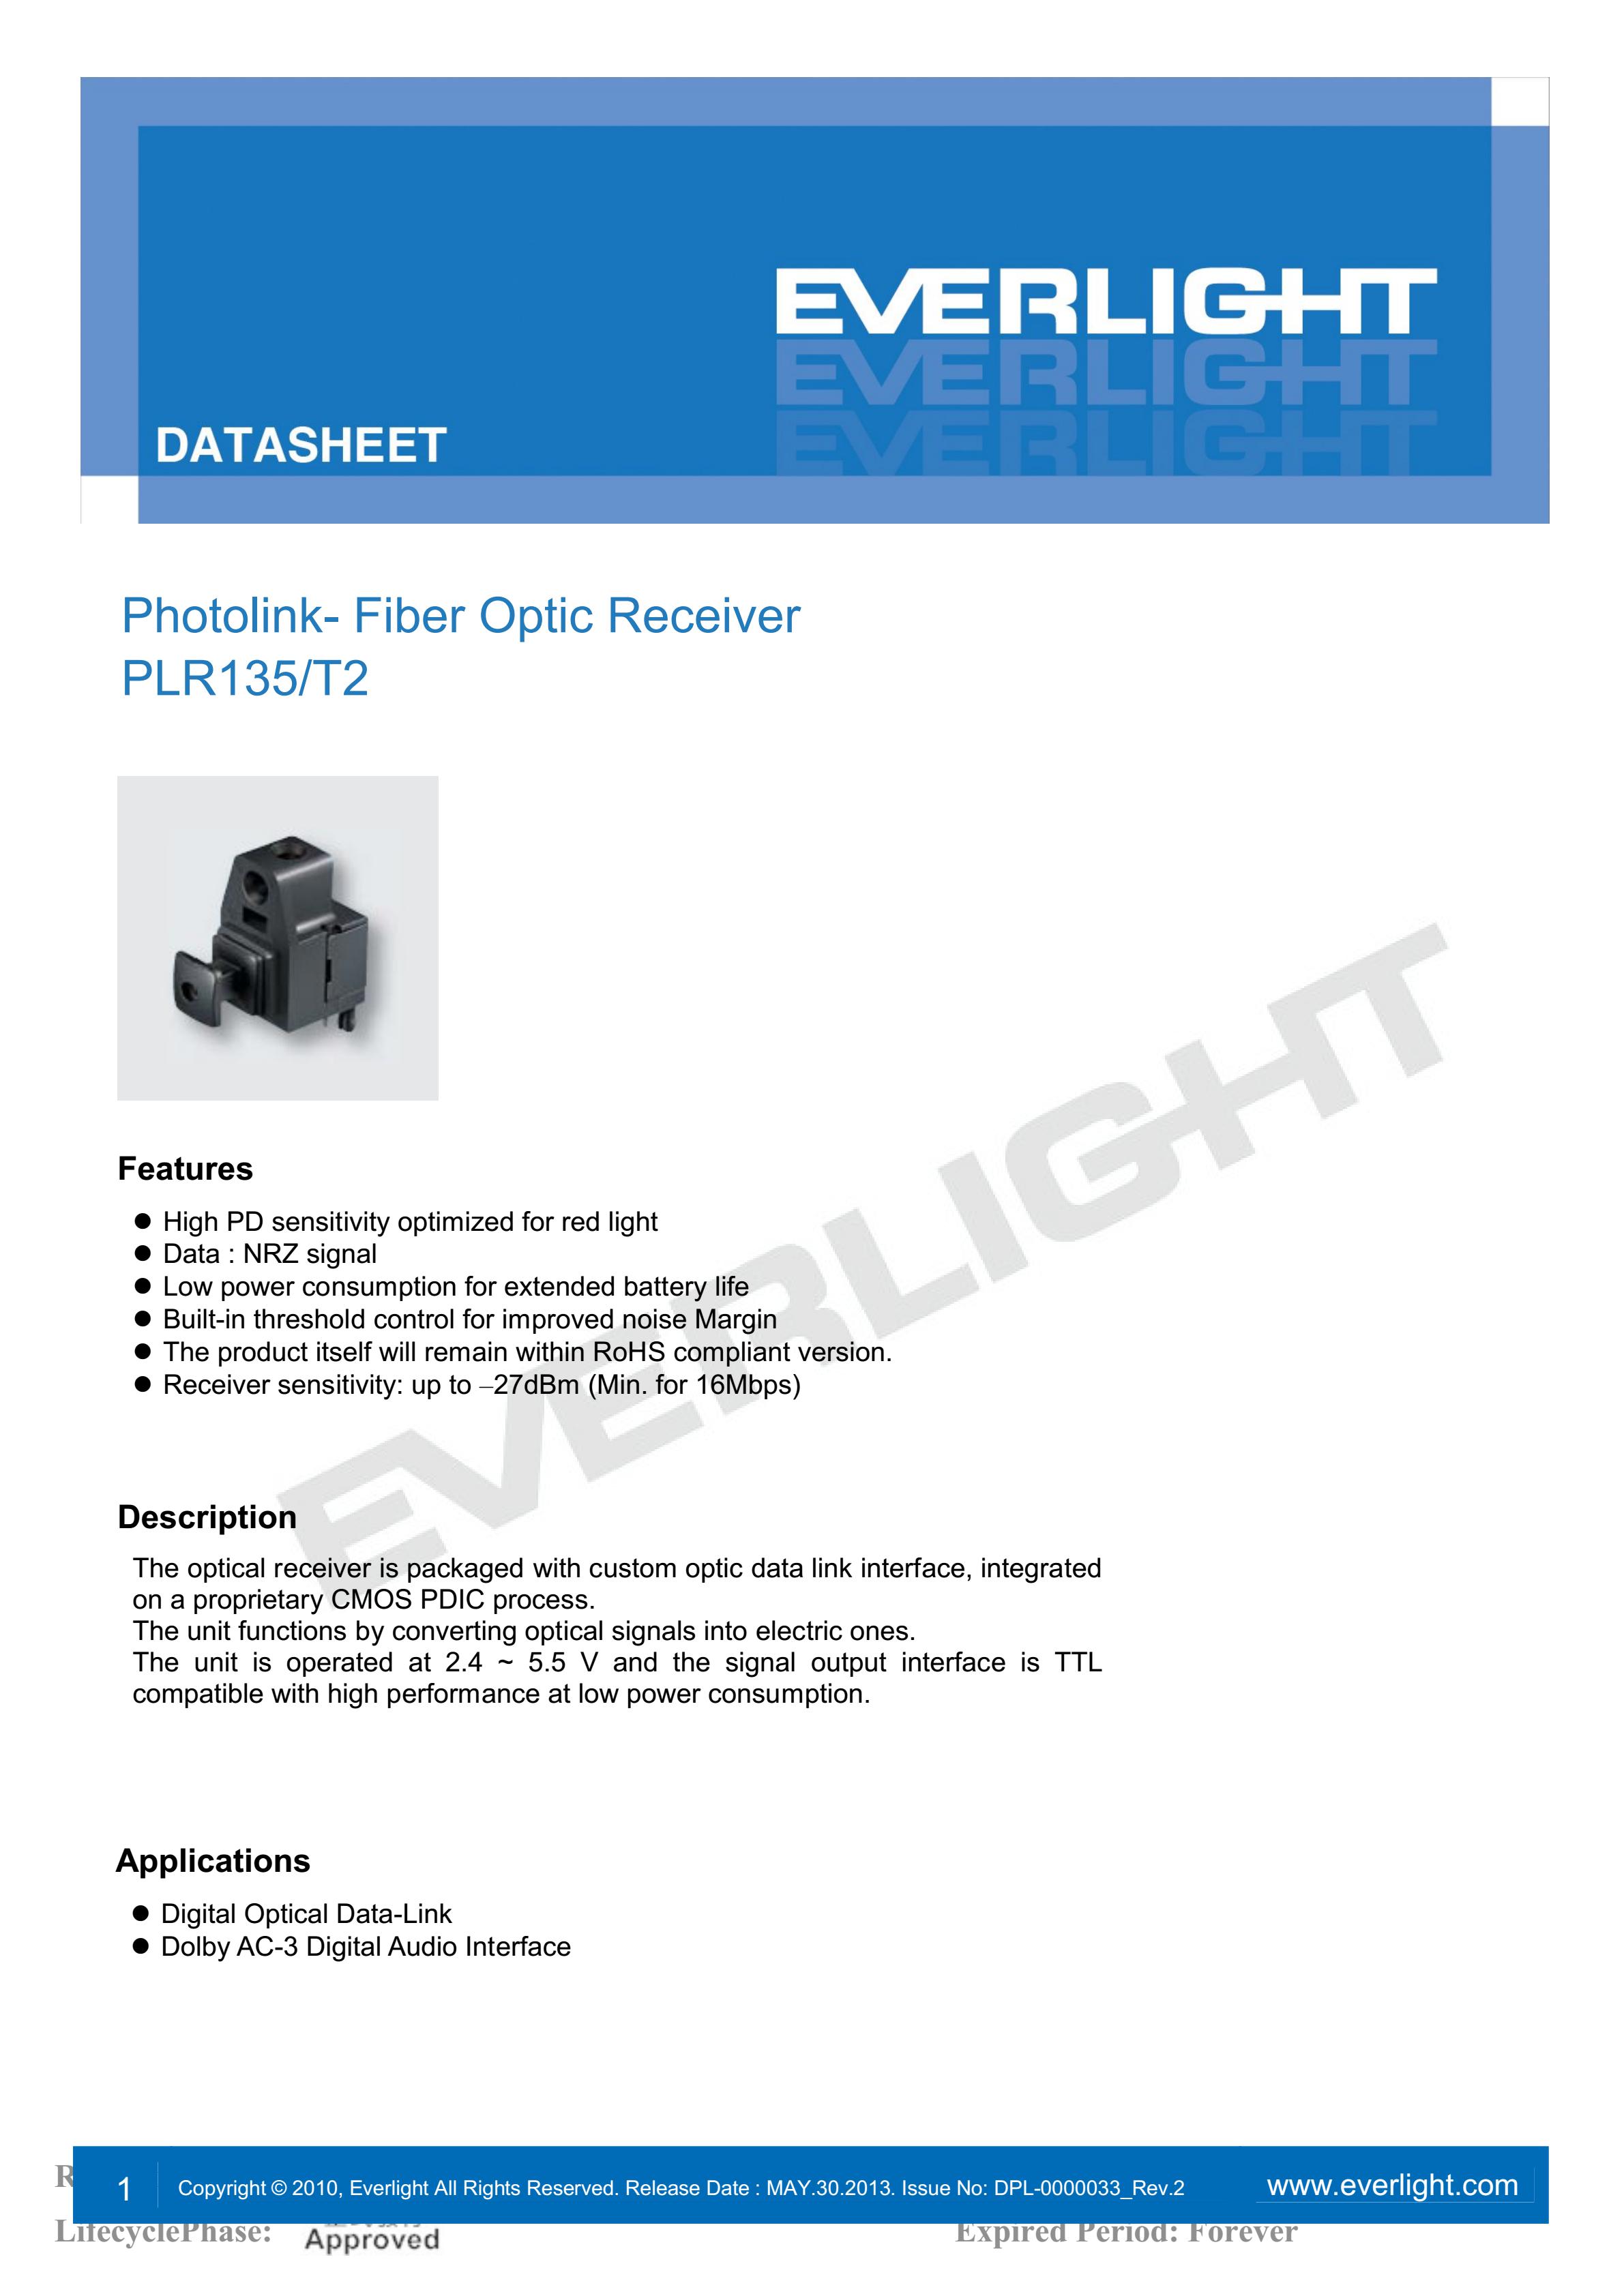 Everlight PLR135/T2 Photolink-Fiber Optic Receiver